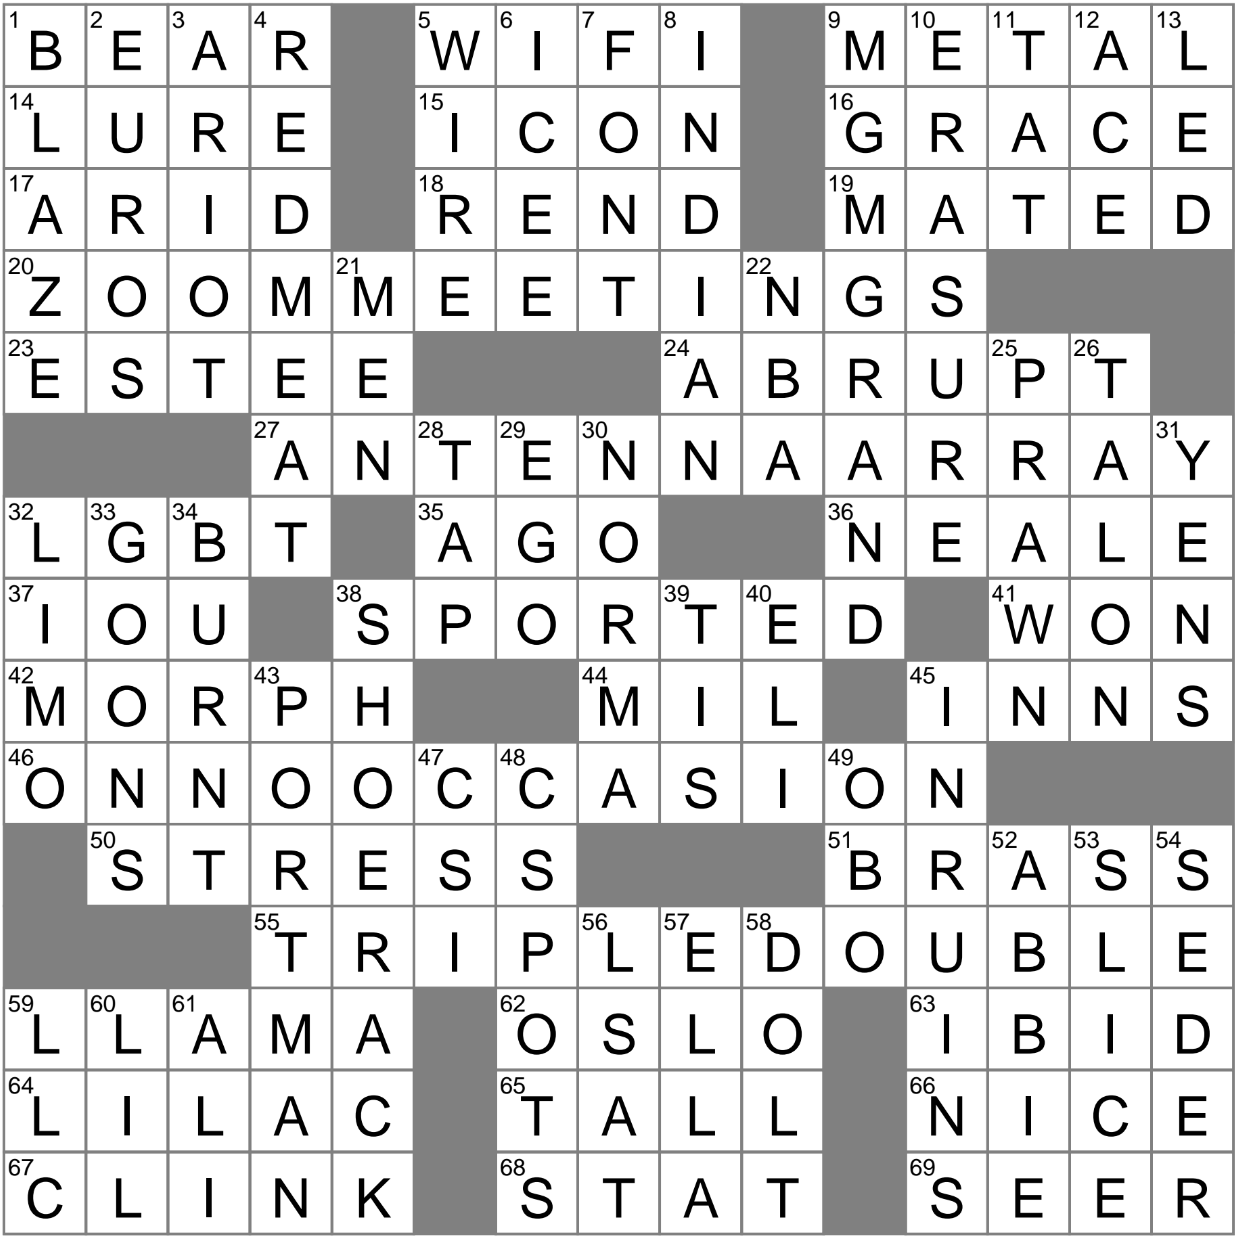 LA Times Crossword 10 Apr 23 Monday